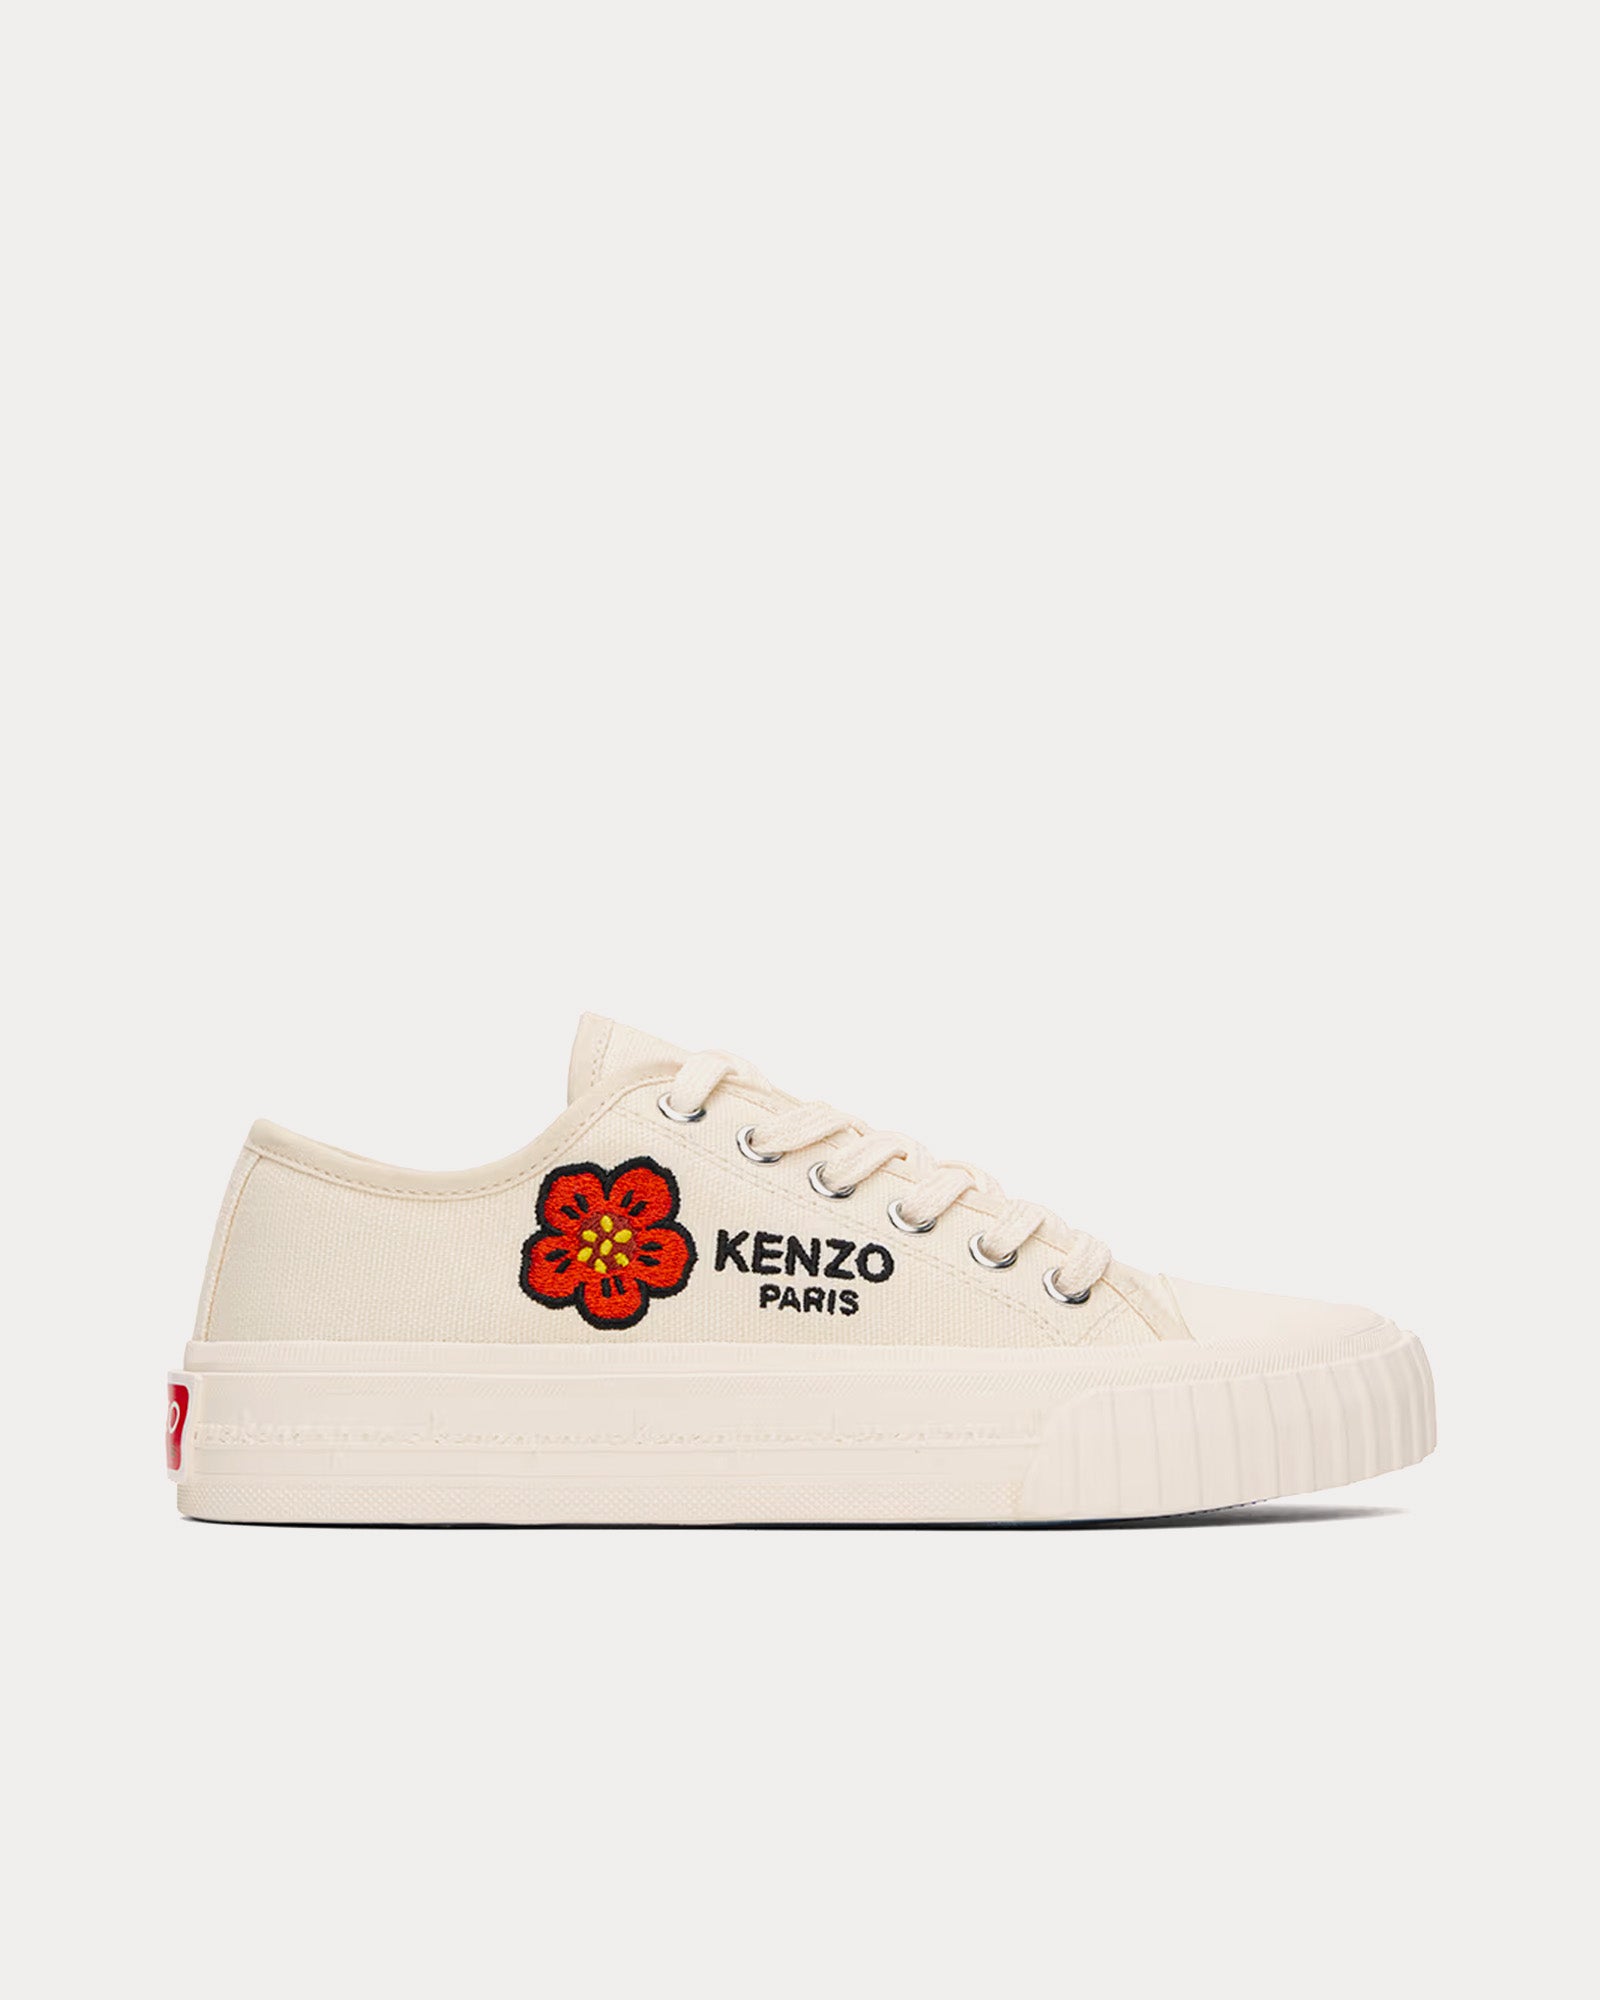 Kenzo - Kenzo Foxy Canvas Cream Low Top Sneakers